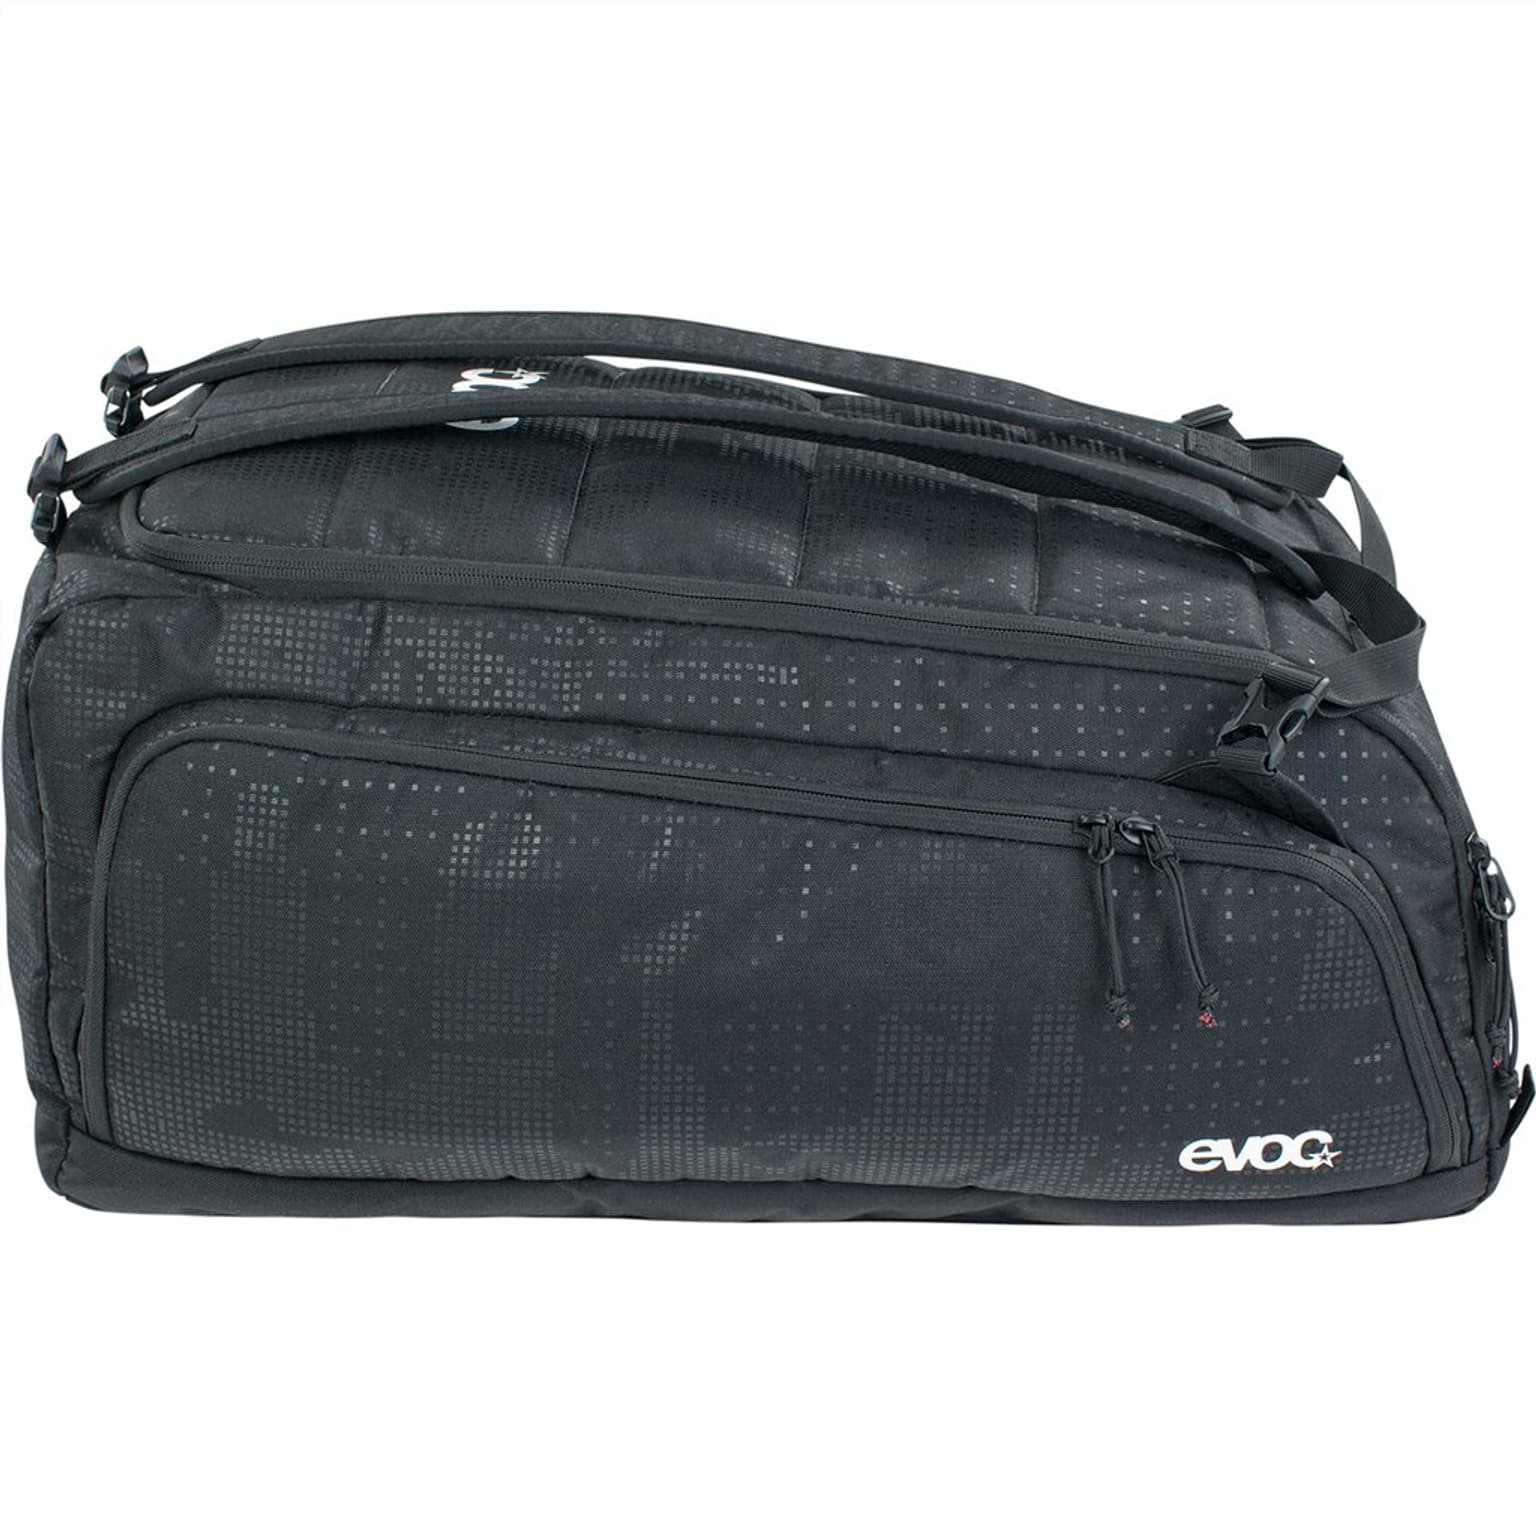 Evoc Evoc Gear Bag 55L Winterrucksack schwarz 1